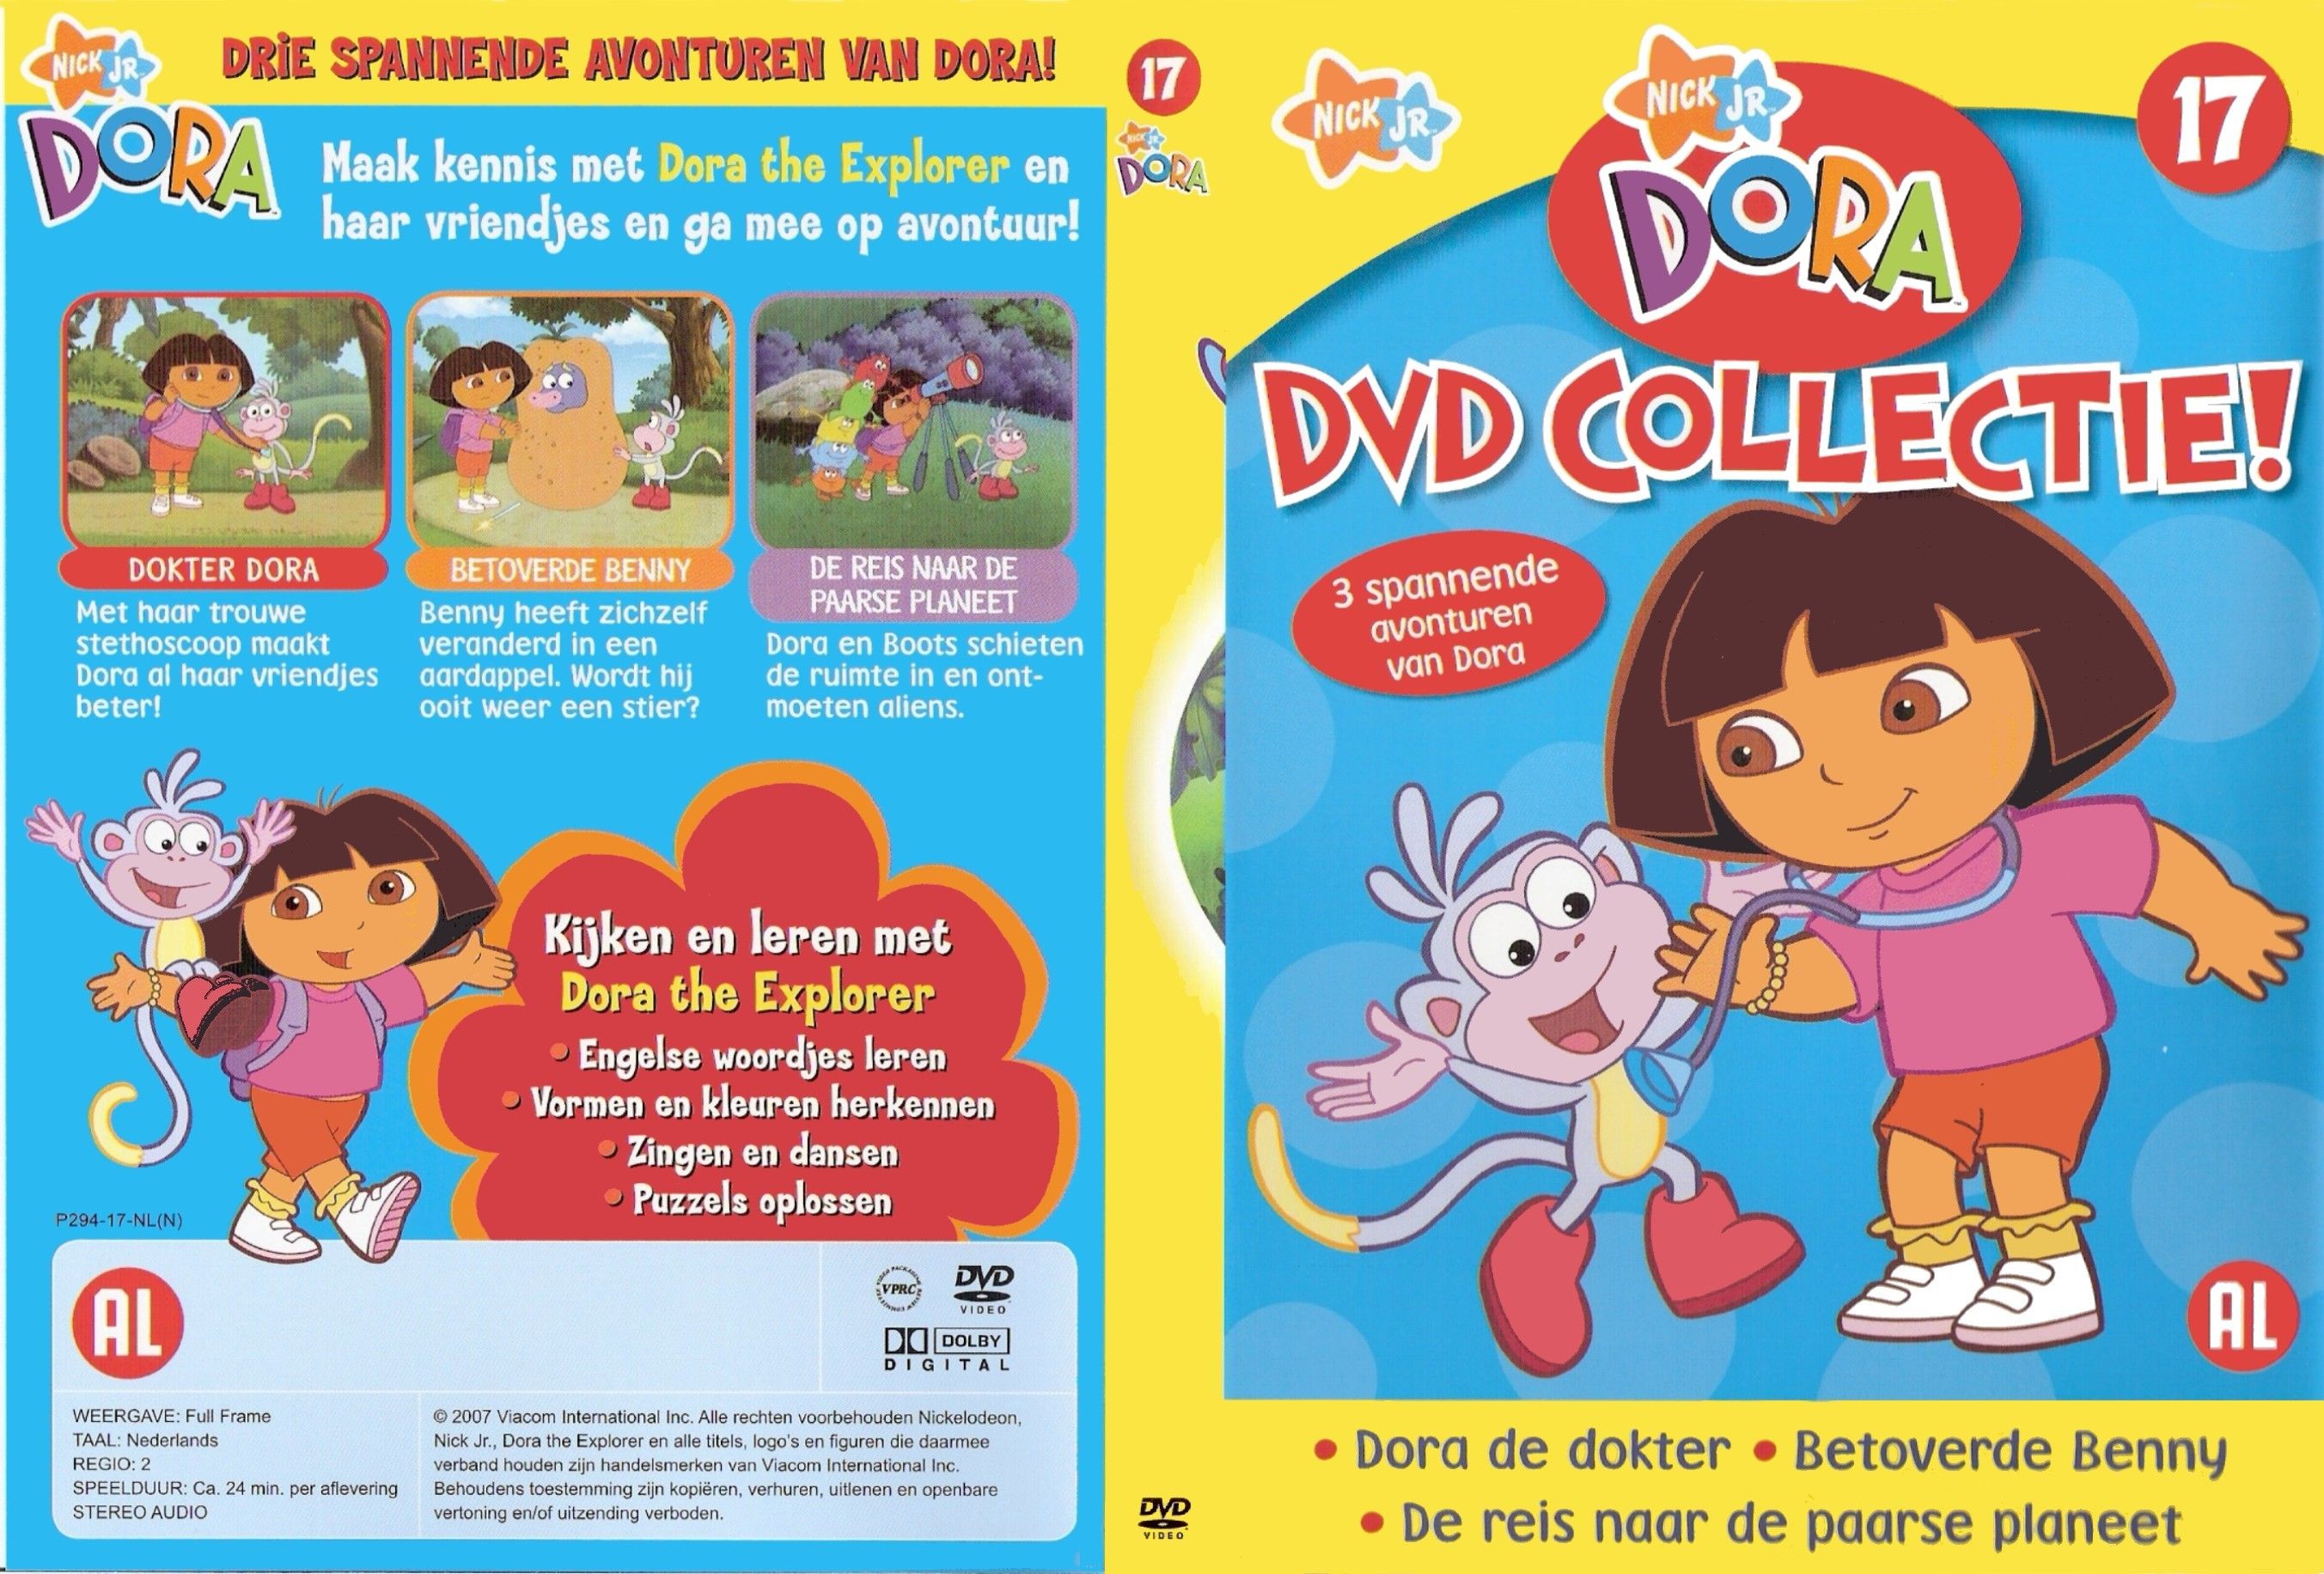 Dora The Explorer DVD Collectie Vol 17 DVD NL.jpg.